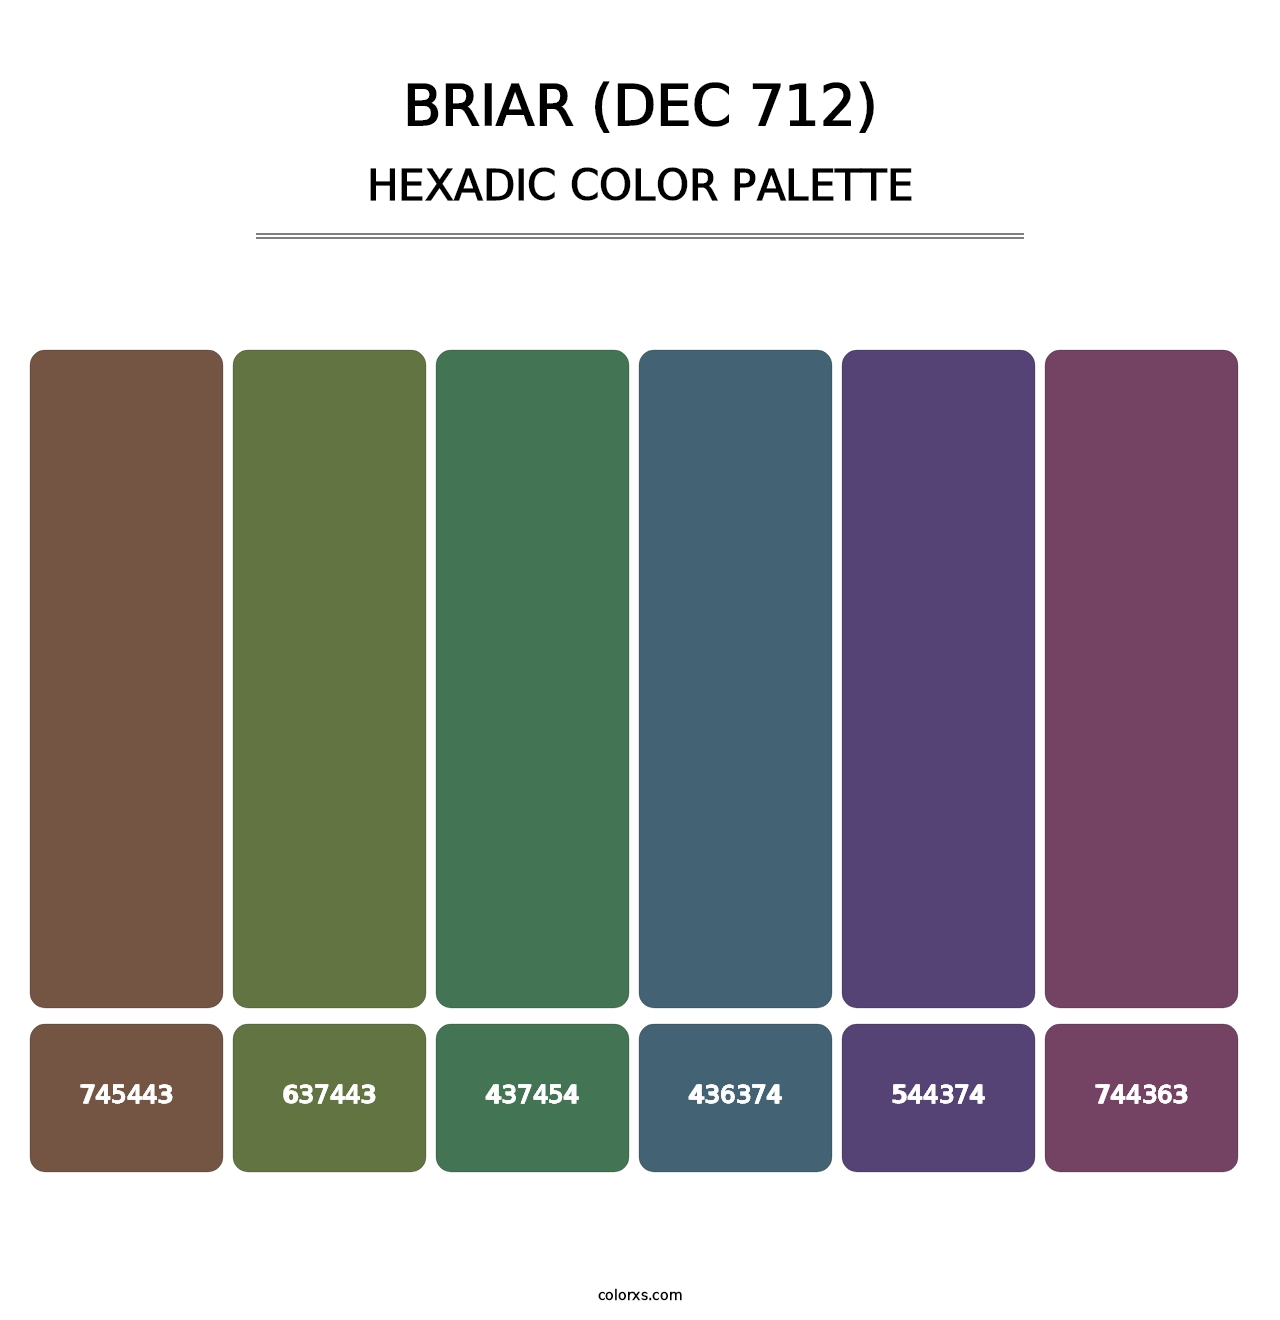 Briar (DEC 712) - Hexadic Color Palette